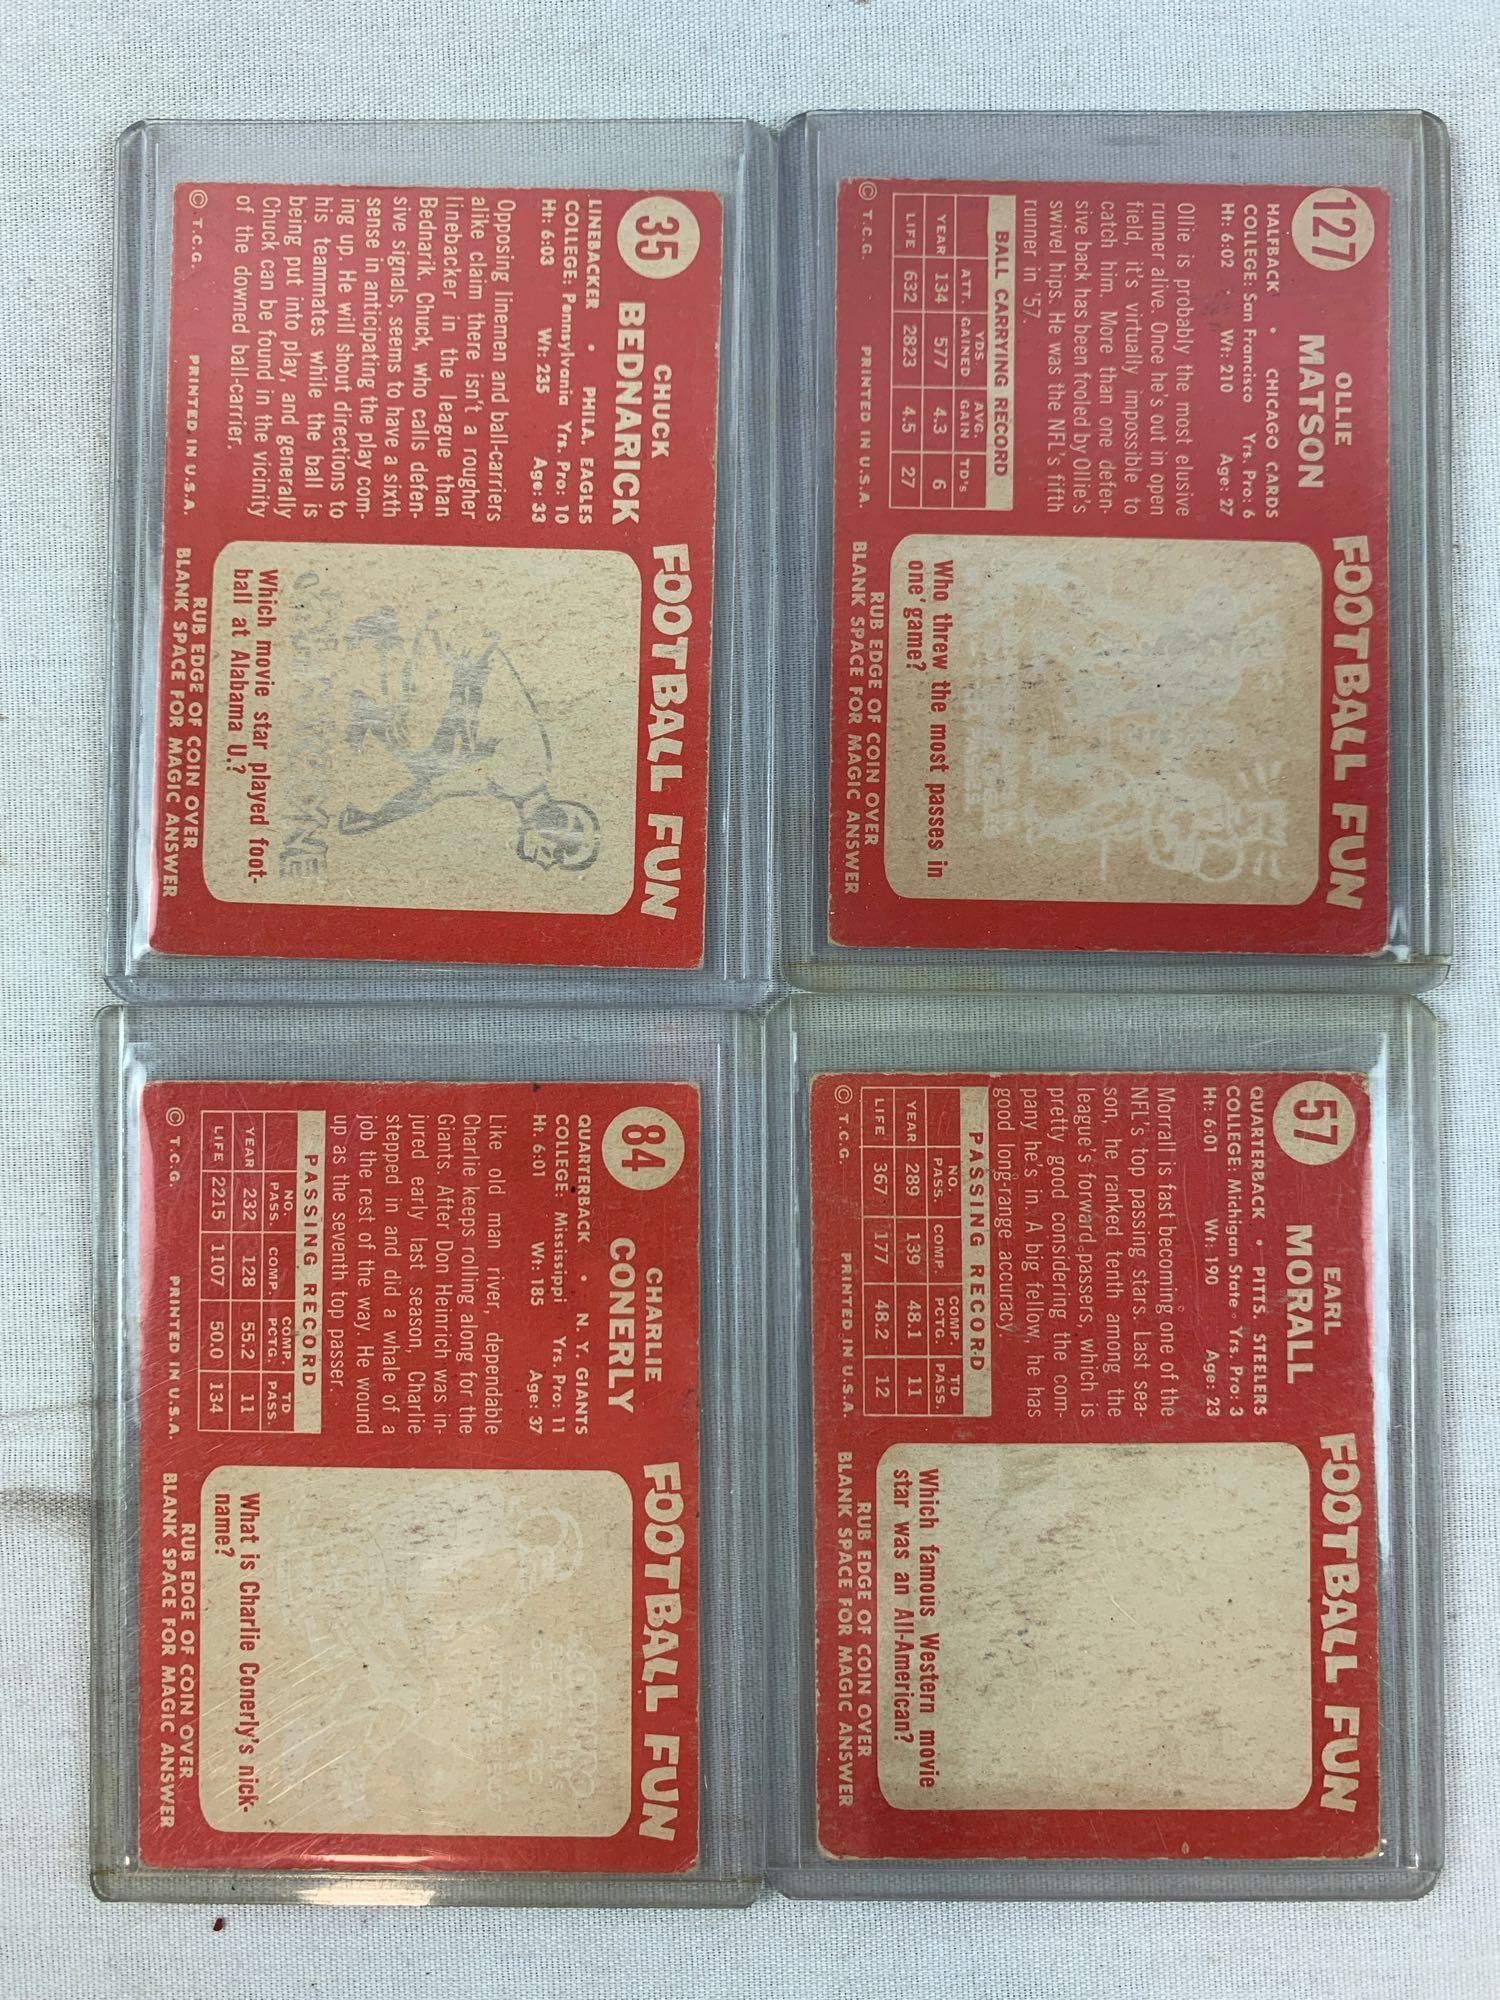 Four 1958 Topps Football cards - Matson, Bednarik, Morrall & Conerly